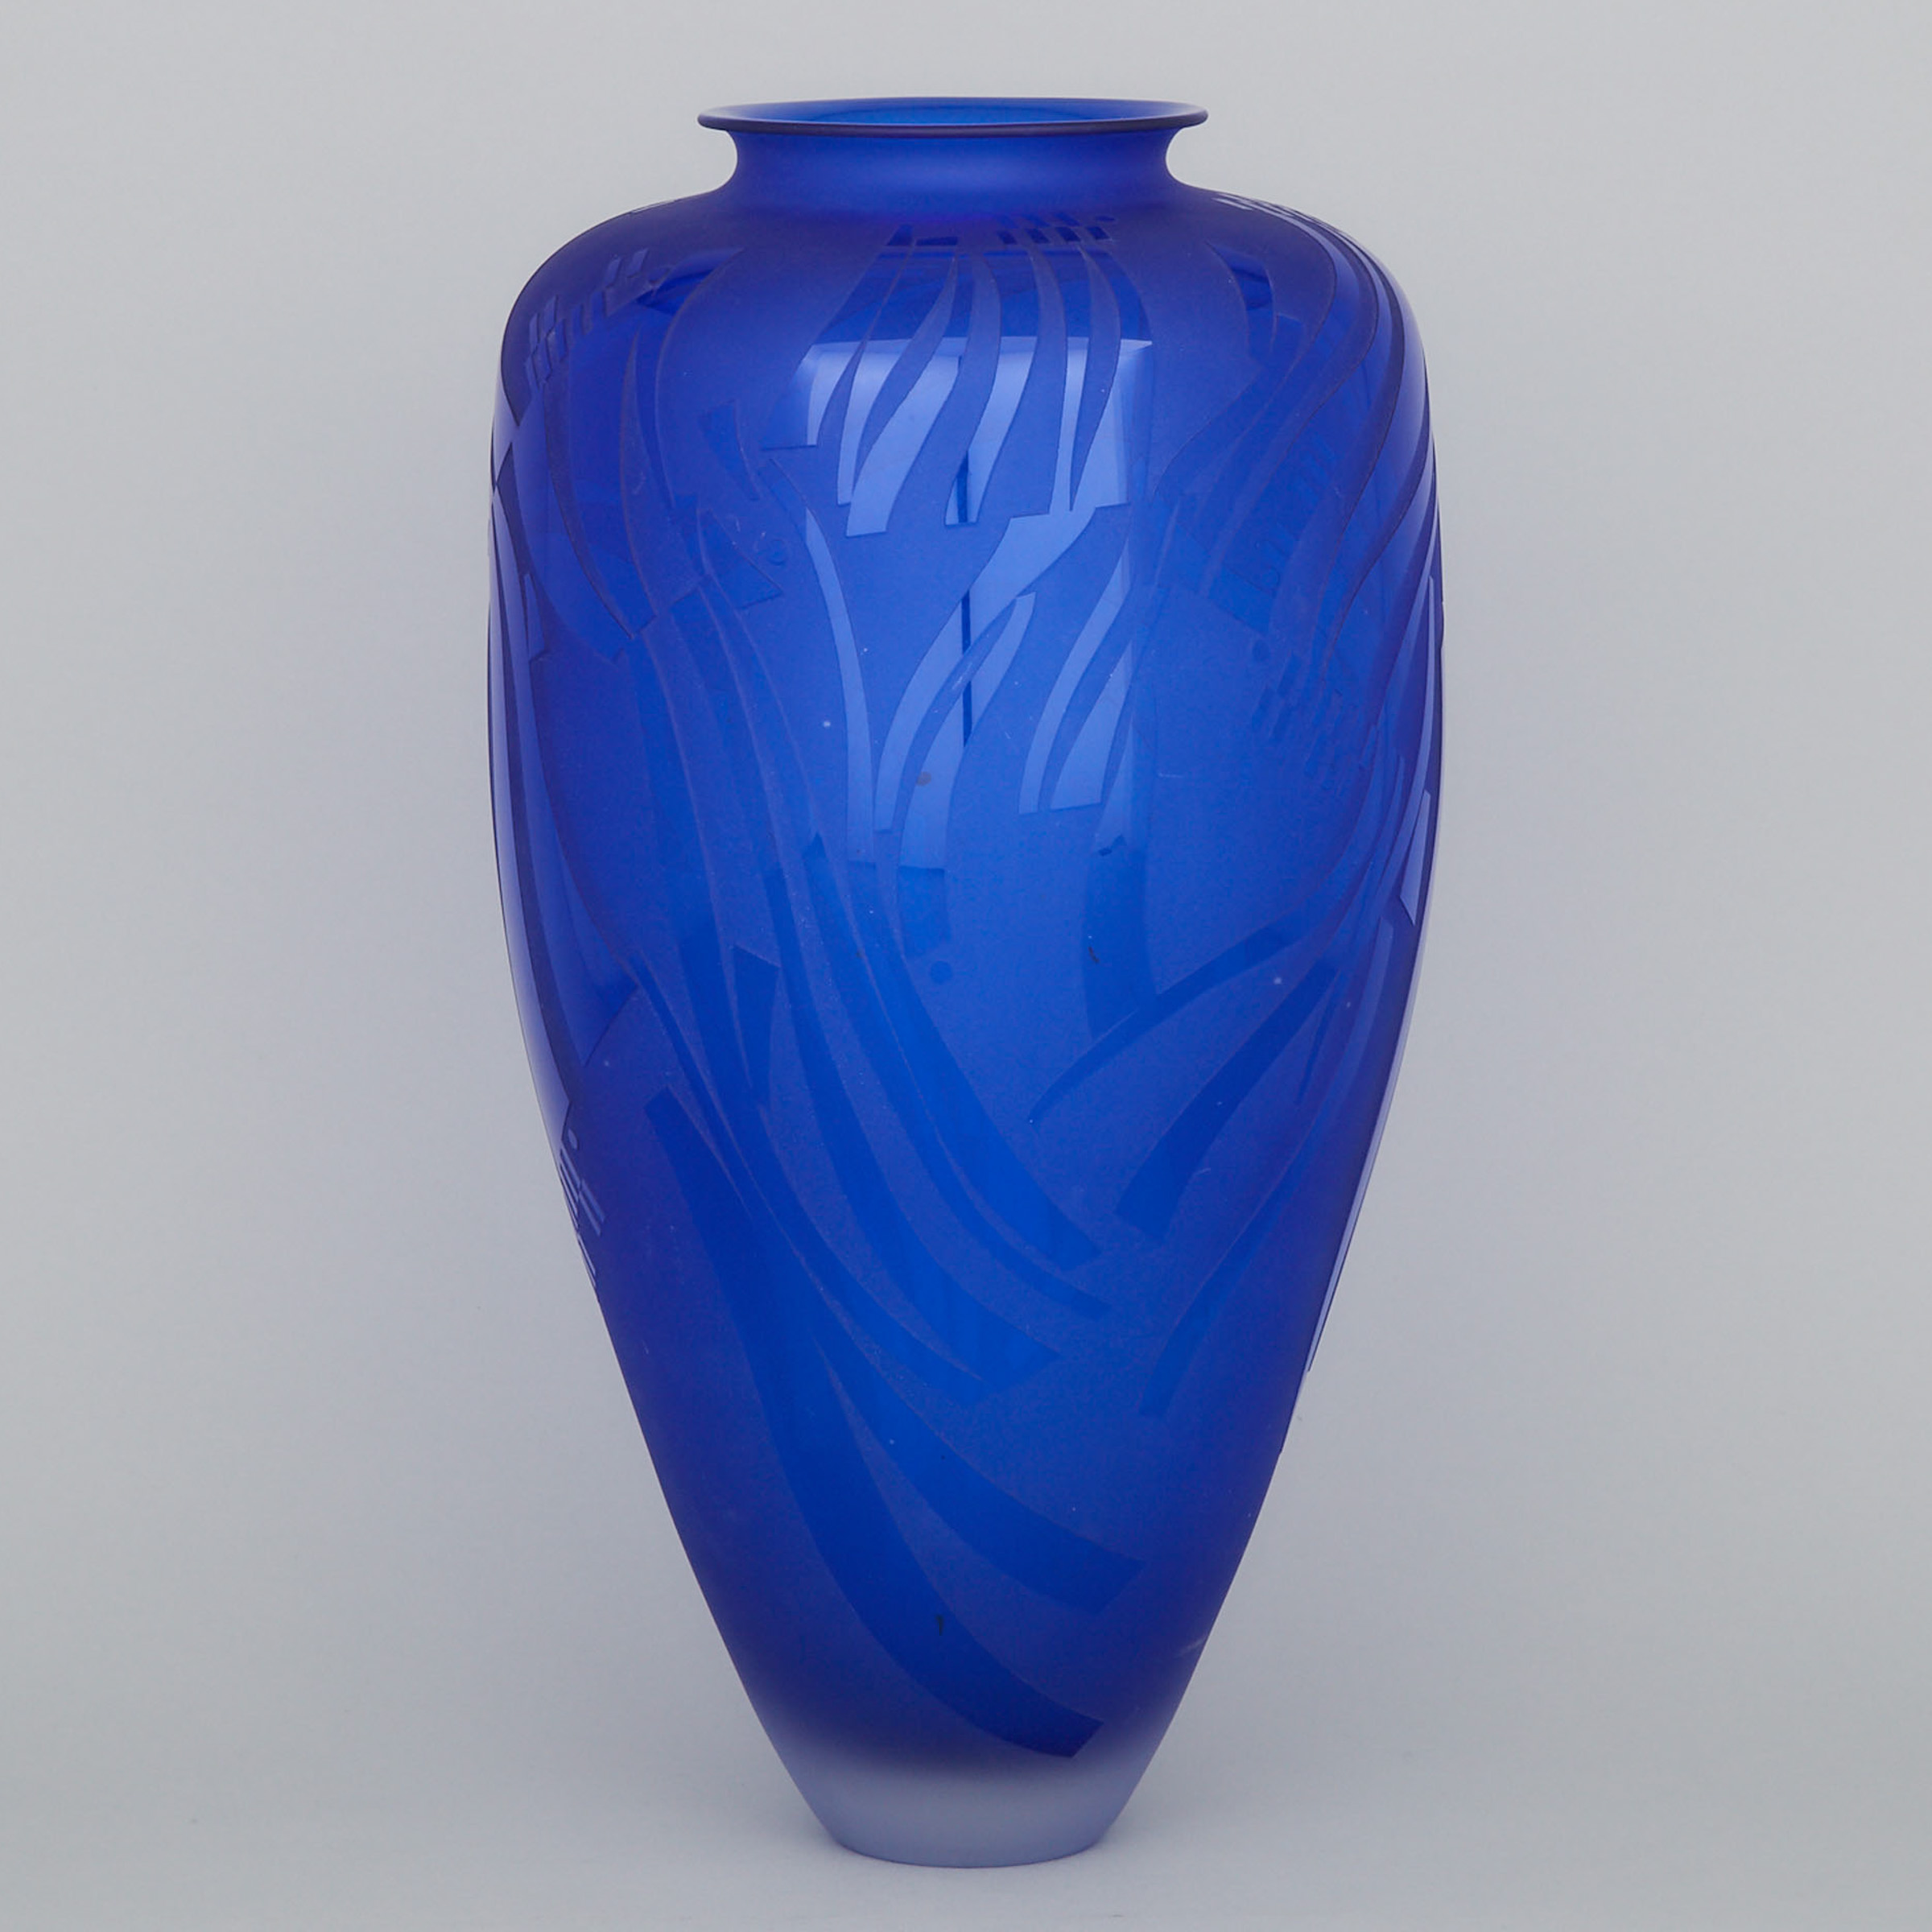 Heather Wood (Canadian, b.1953) and John Kepkiewicz (Canadian, b.1955), Etched Blue Glass Vase, 1988